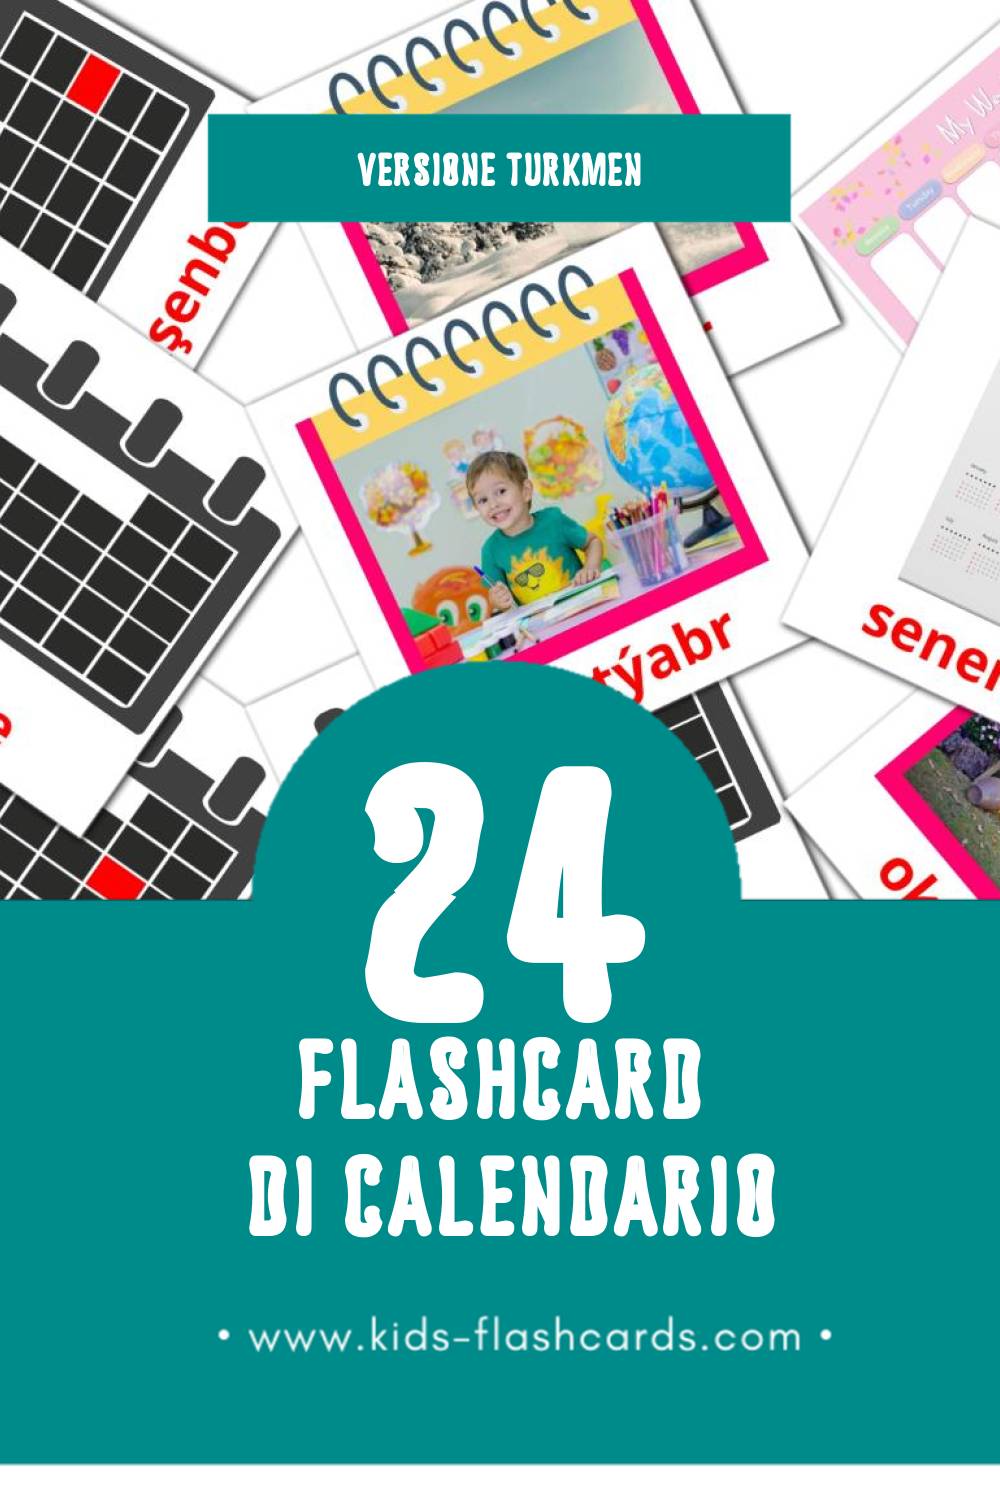 Schede visive sugli Kalendar per bambini (24 schede in Turkmen)